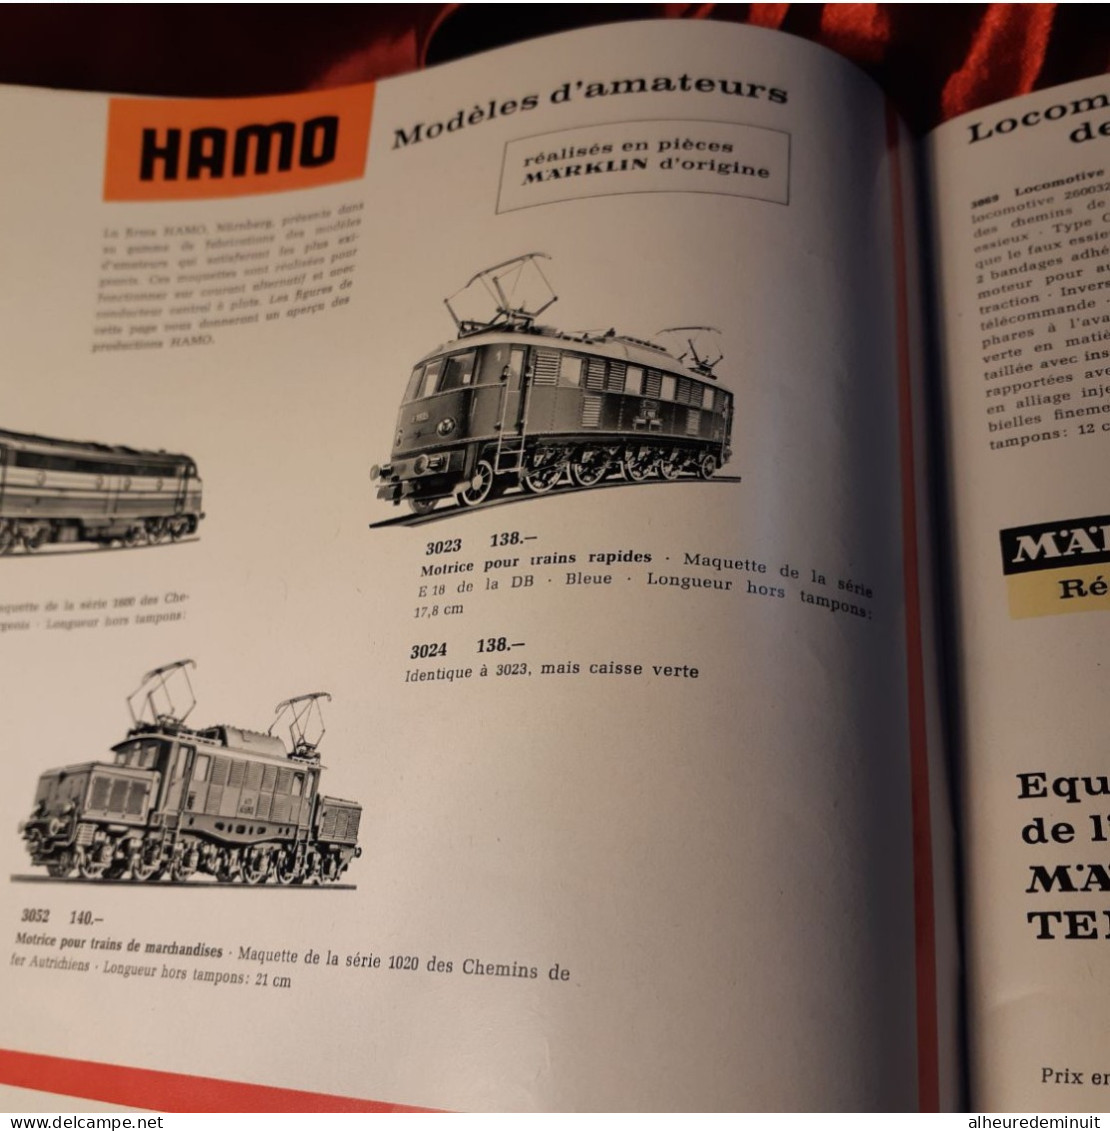 CATALOGUE TRAINS MARKLIN"1965-66"wagons maquettes"locomotives"transfo"trains"aiguillage"motrice"Trans Europ express"....